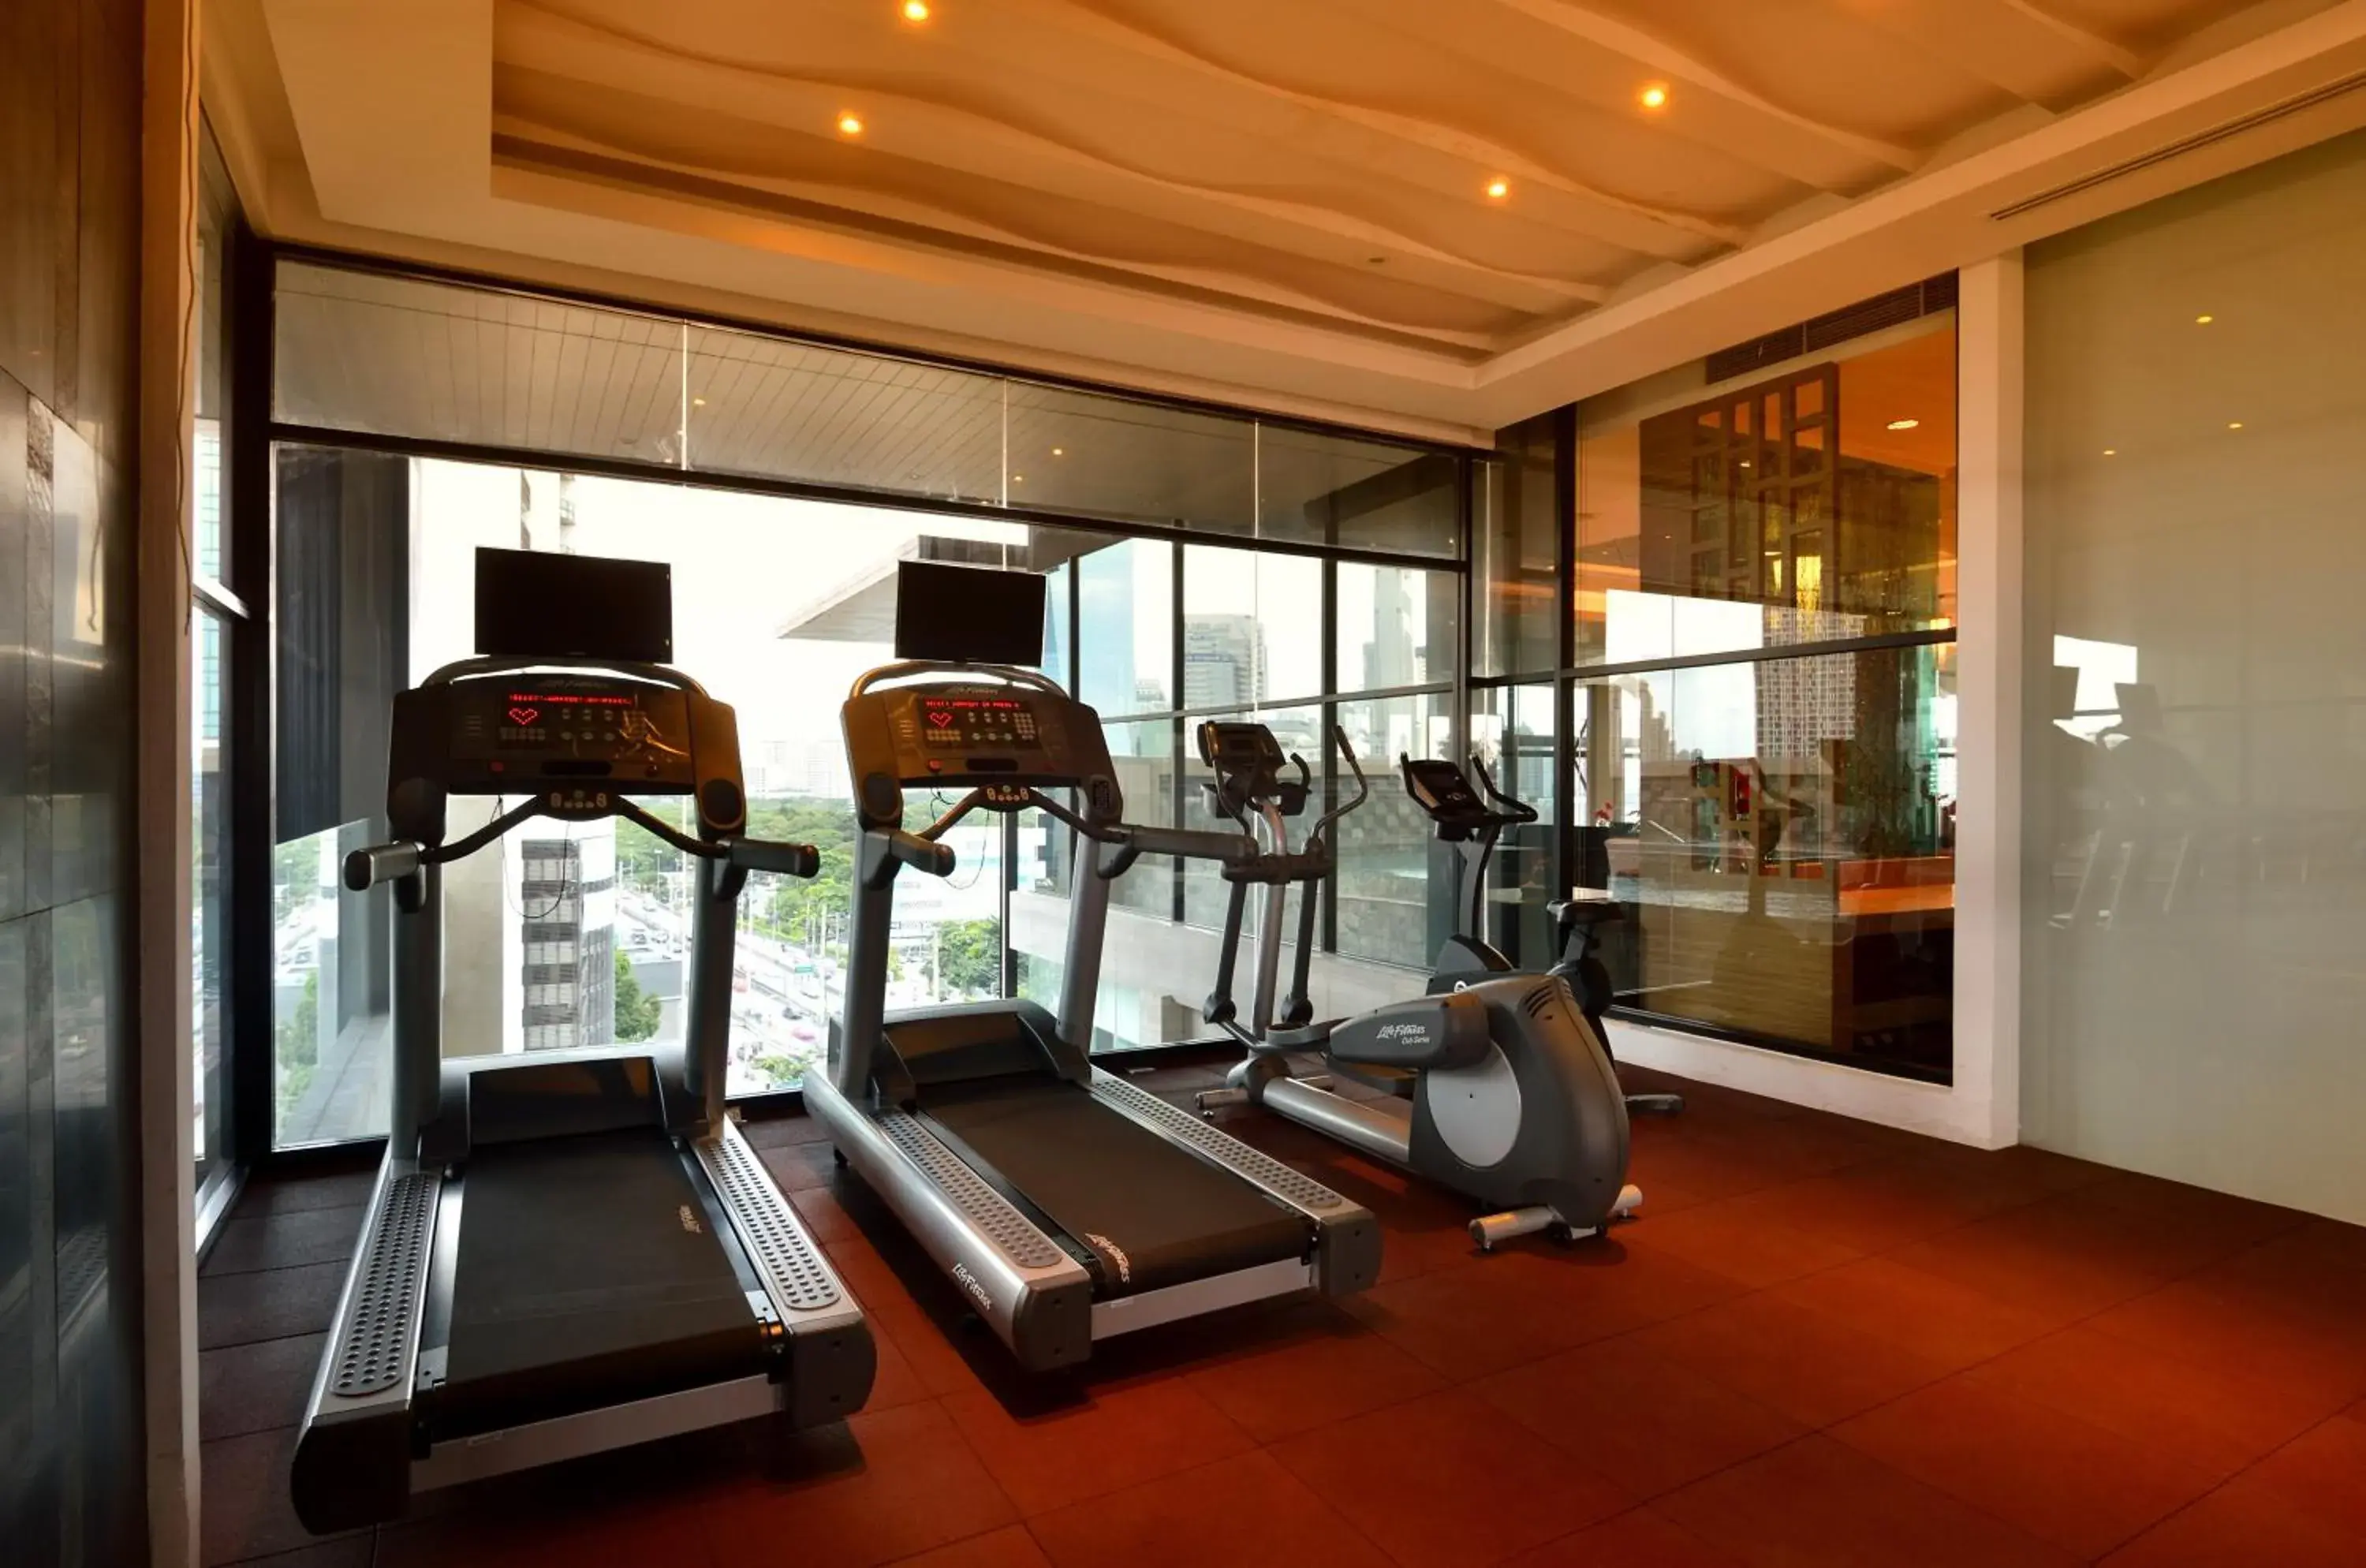 Fitness centre/facilities, Fitness Center/Facilities in AETAS lumpini